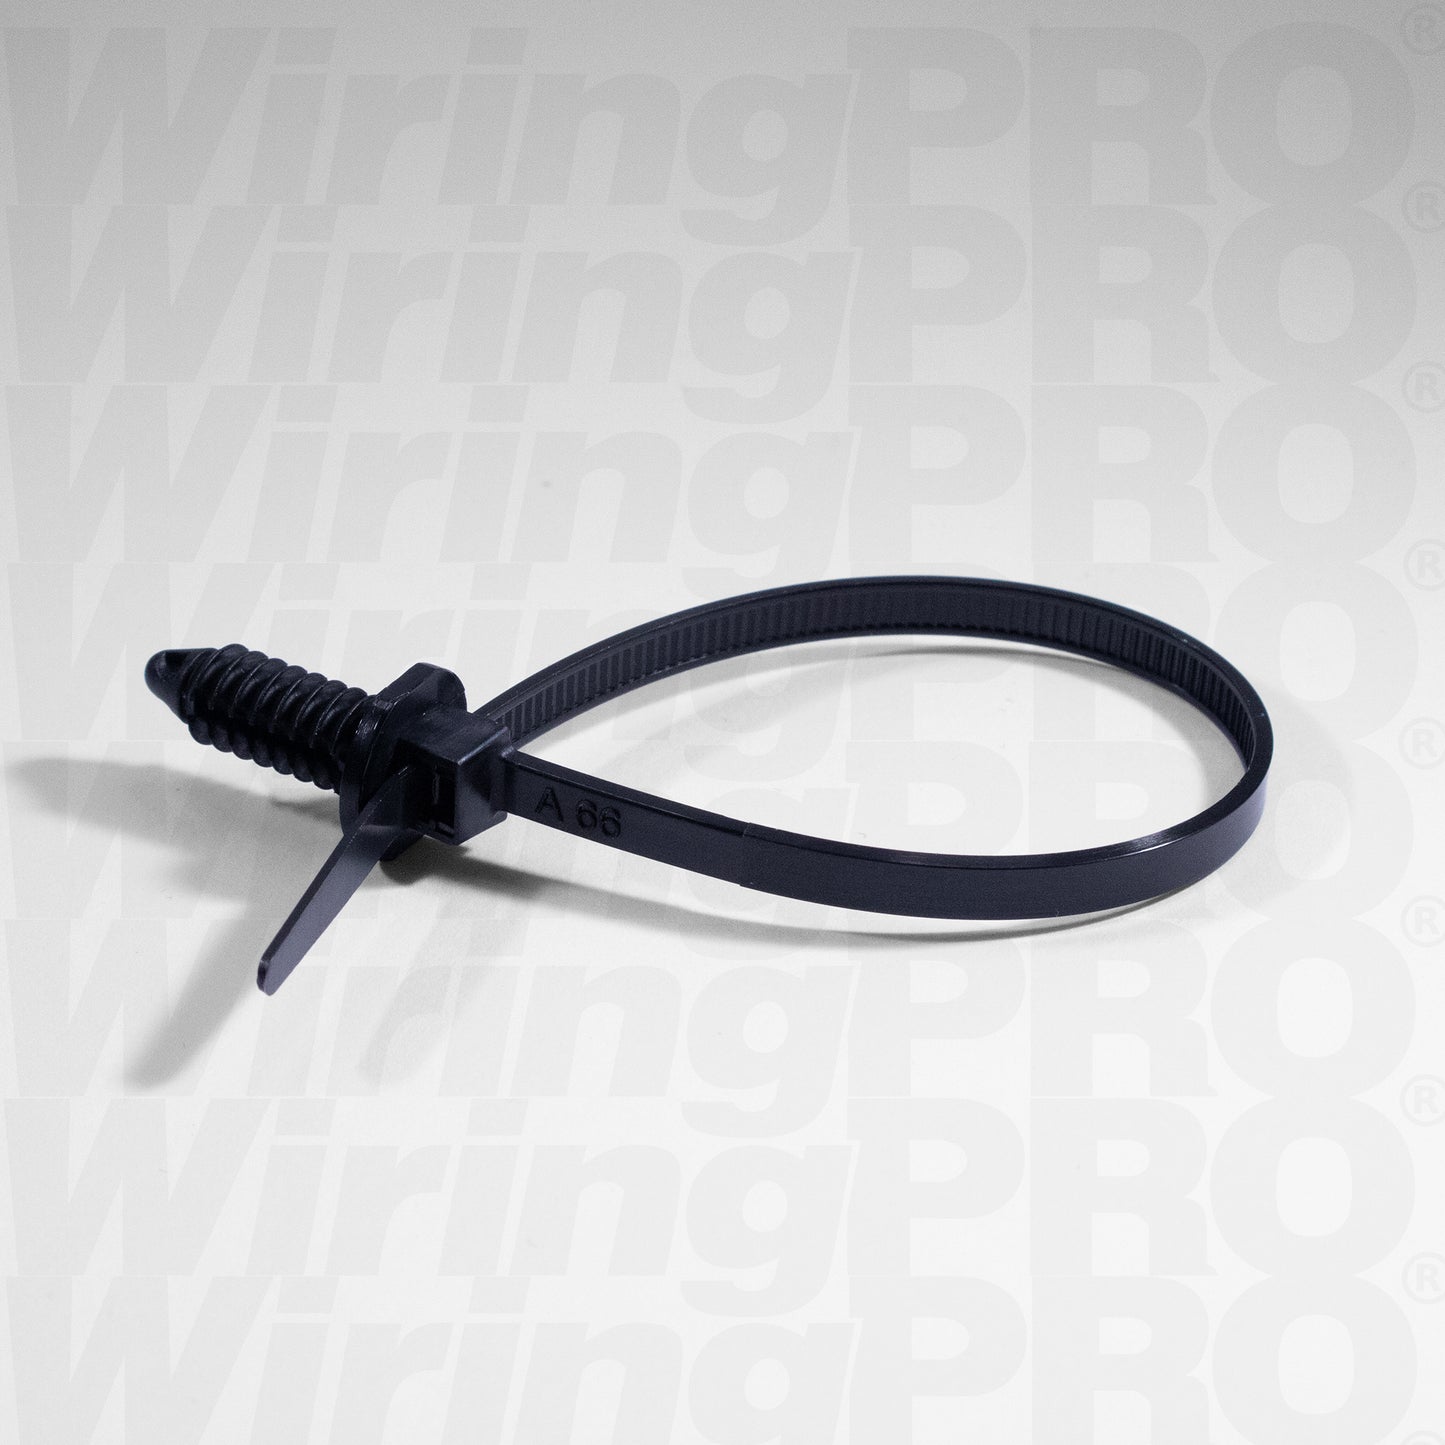 Fir Tree Cable Ties - UV Black Nylon